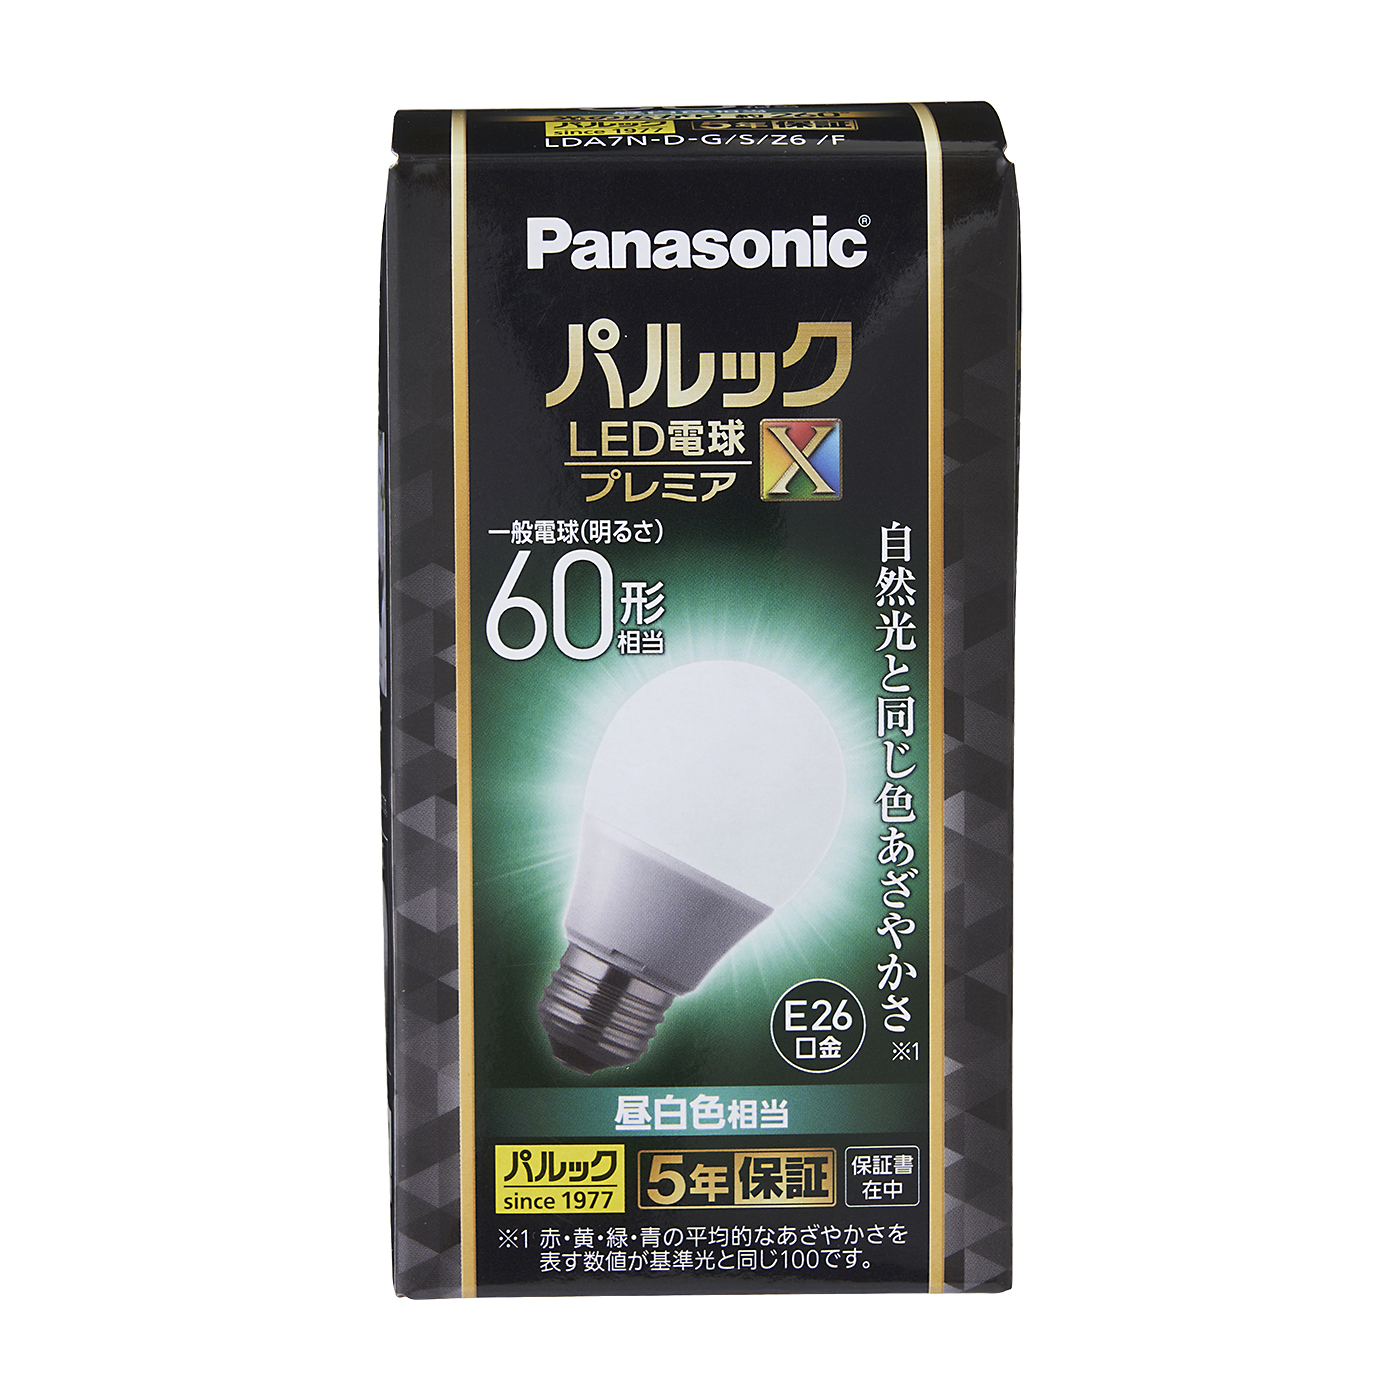 Panasonic LED ハロゲン電球 5個セット 白色 お得